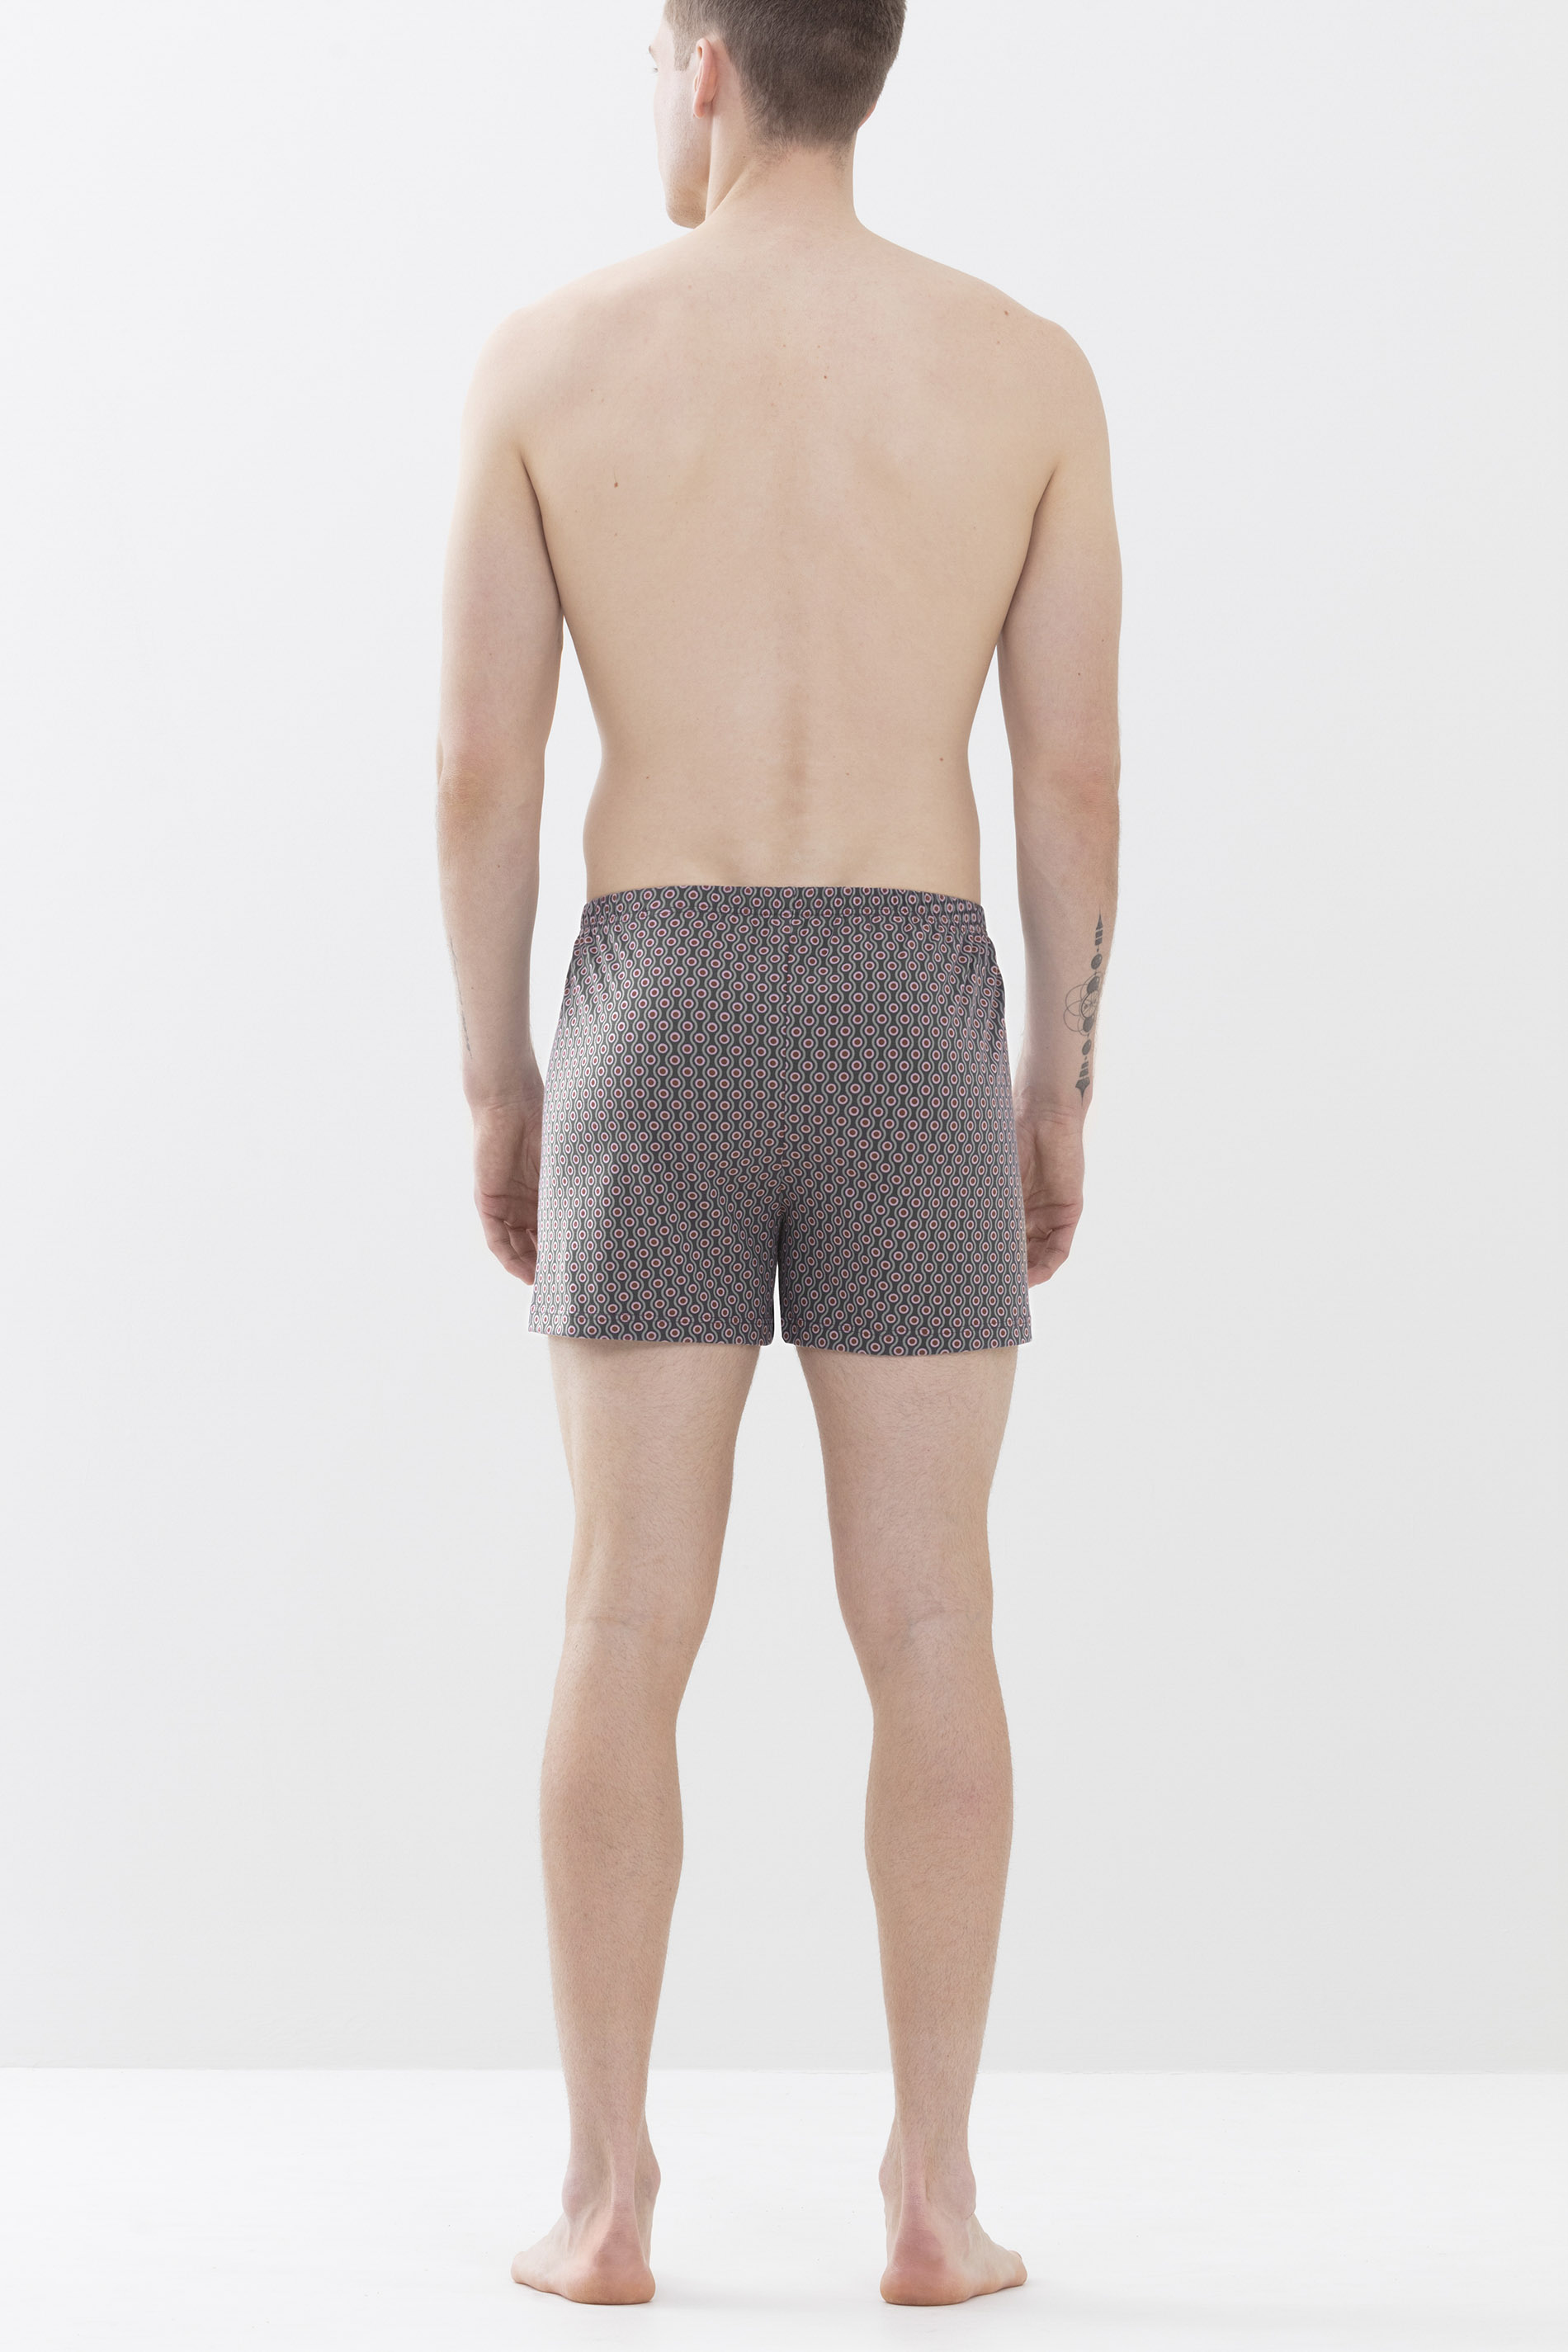 Boxer shorts Oxblood Serie 4 Col Dots Rear View | mey®